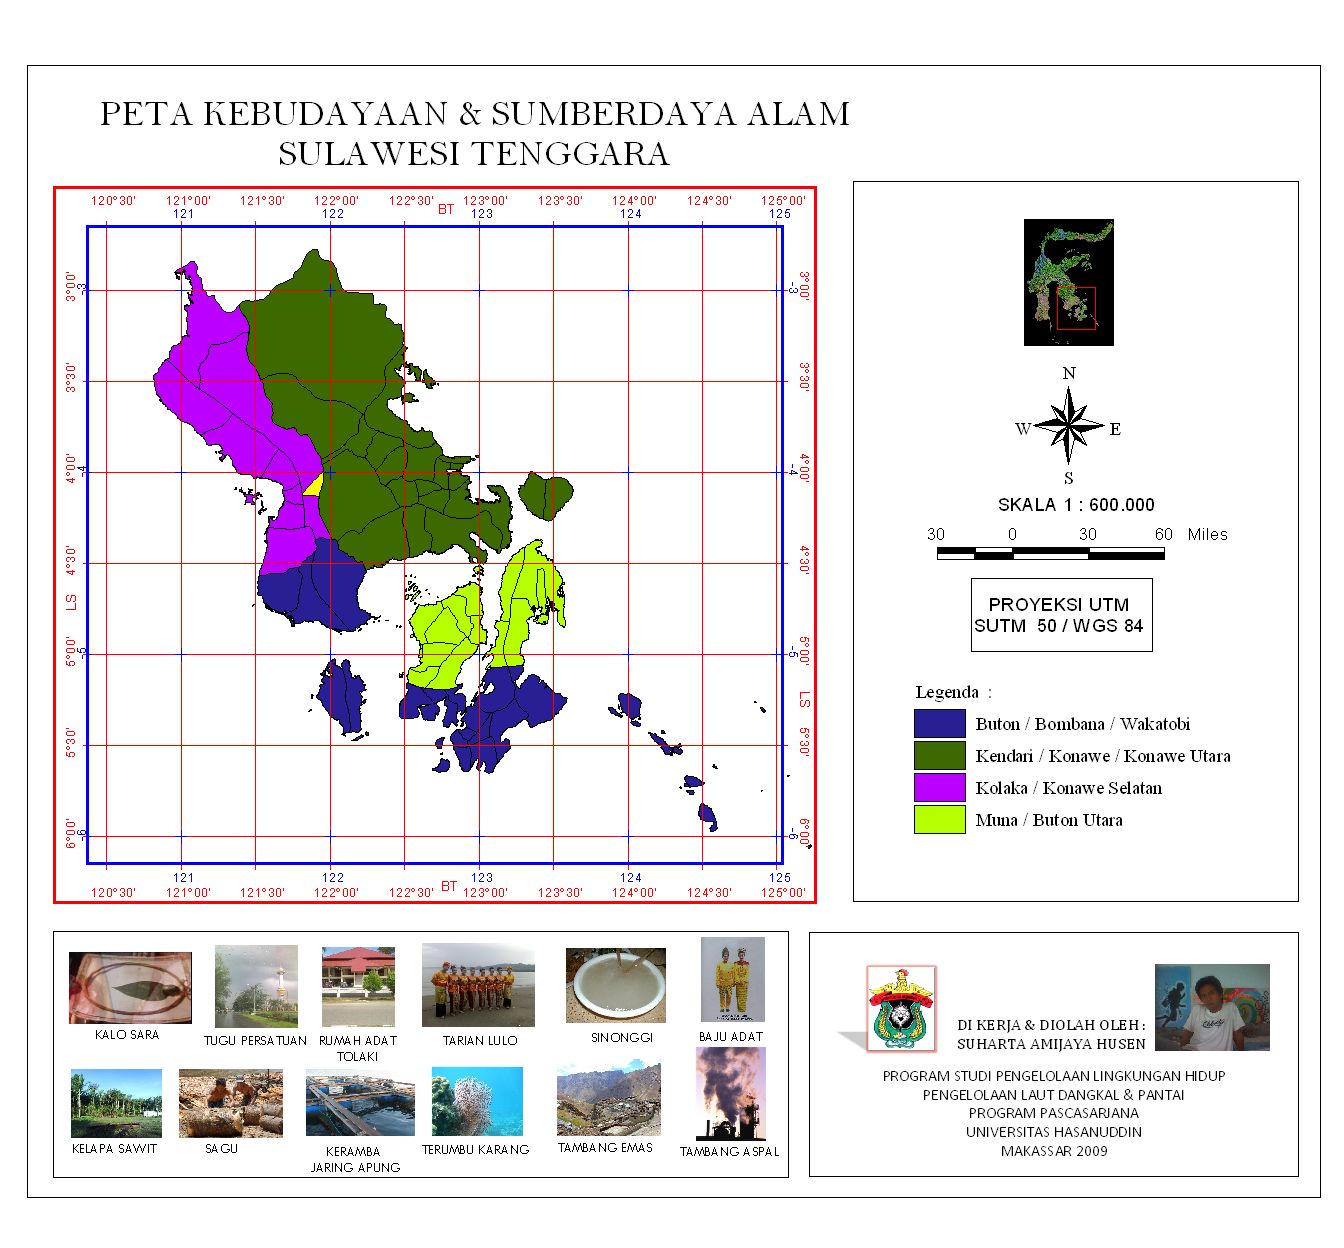 Sejarah Kebudayaan Adat Istiadat Suku Tolaki Di Sulawesi